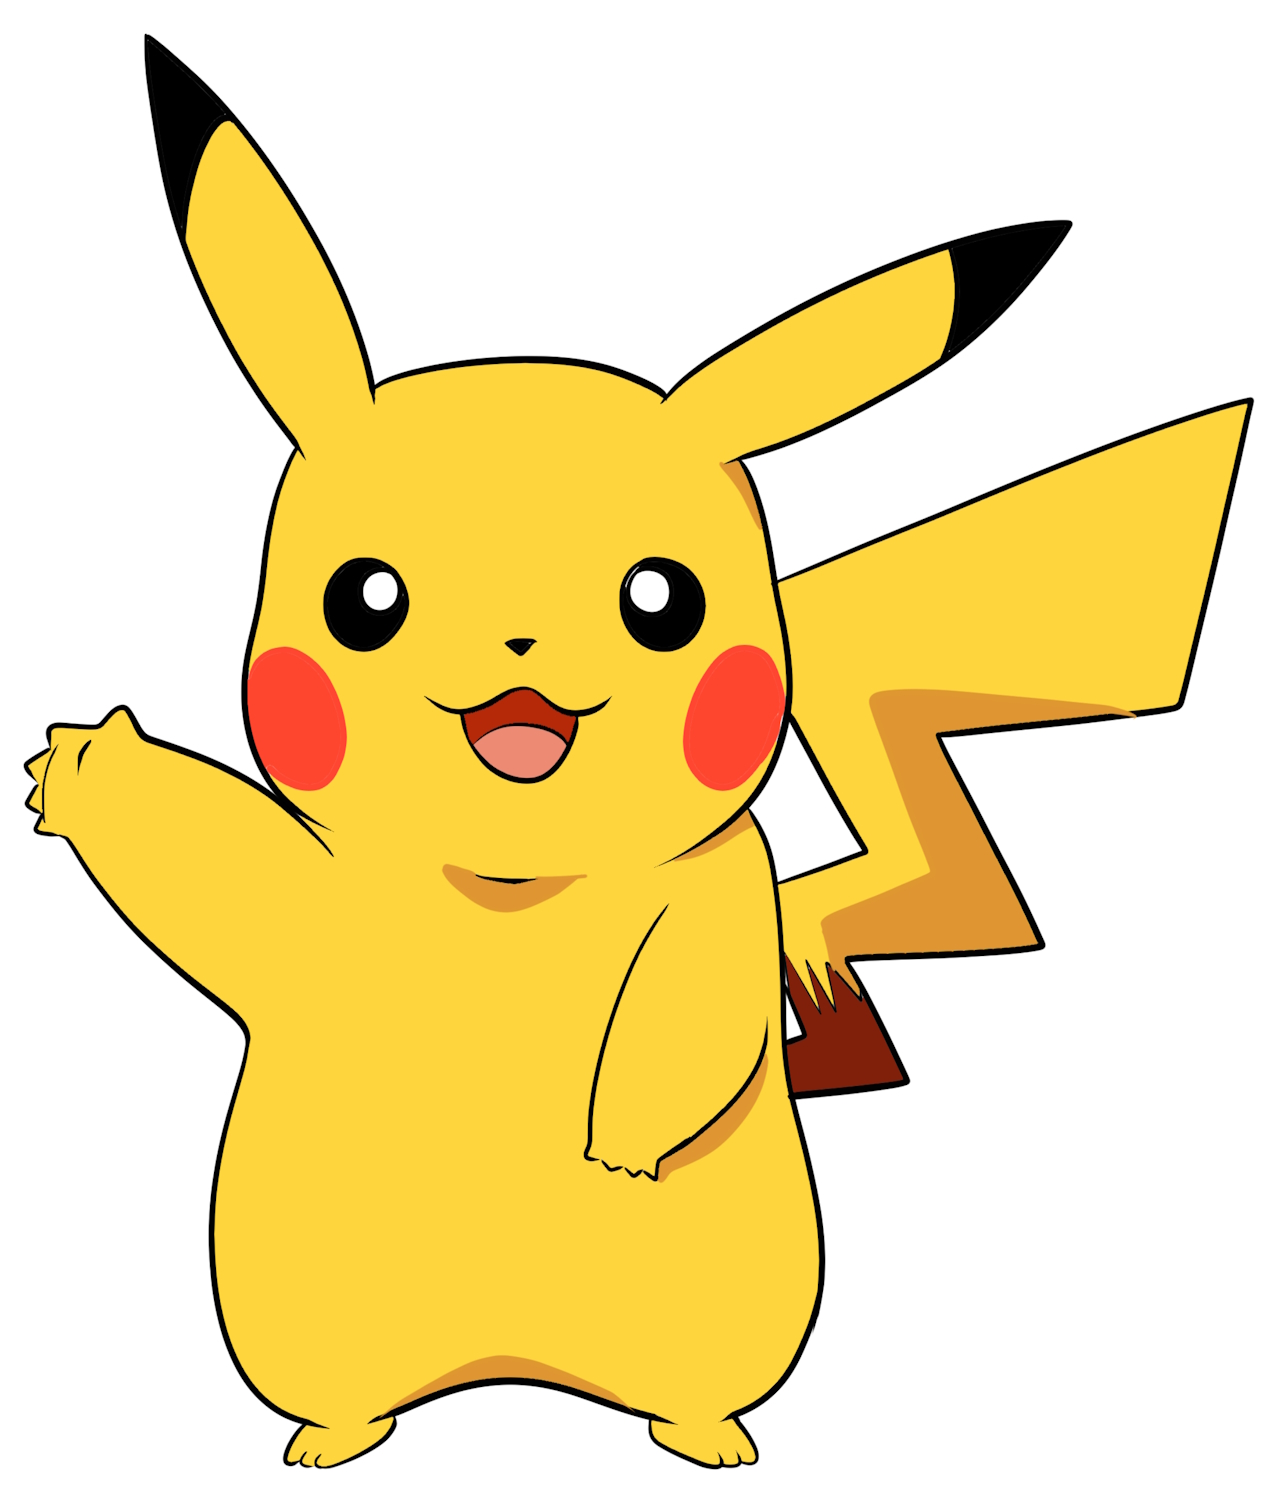 Pikachu from Pokémon